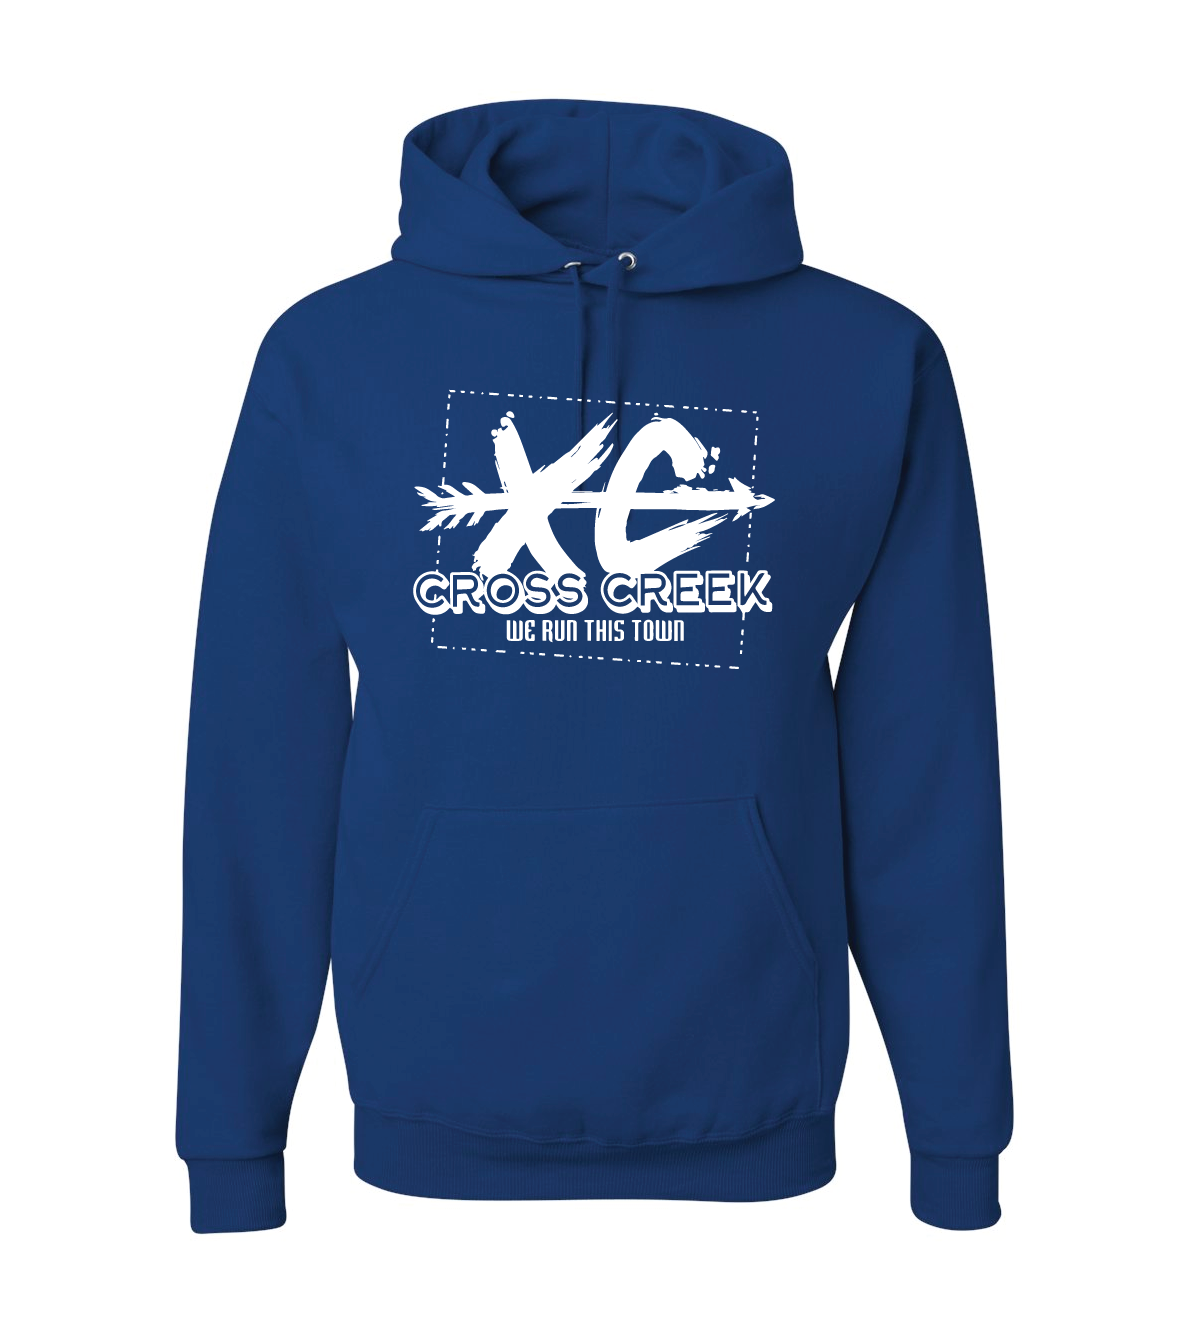 Cross Creek - Cross Country Hooded Sweatshirt (Youth & Adult)